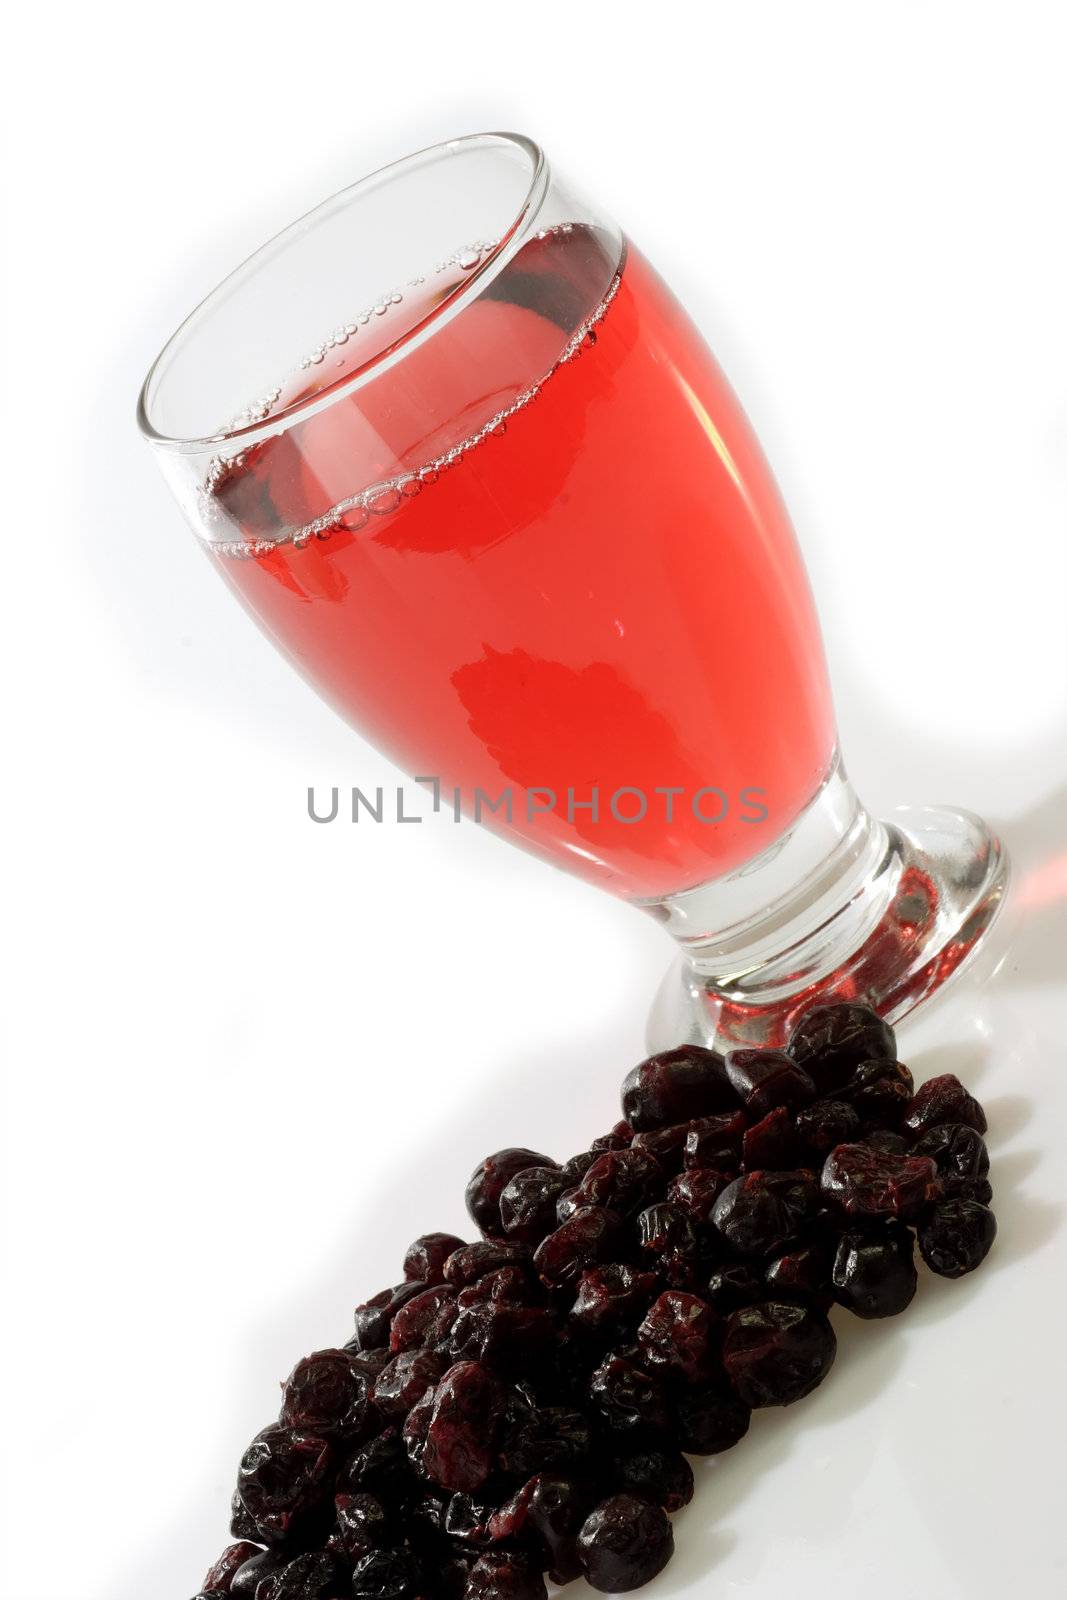 Cranberry juice by Teamarbeit